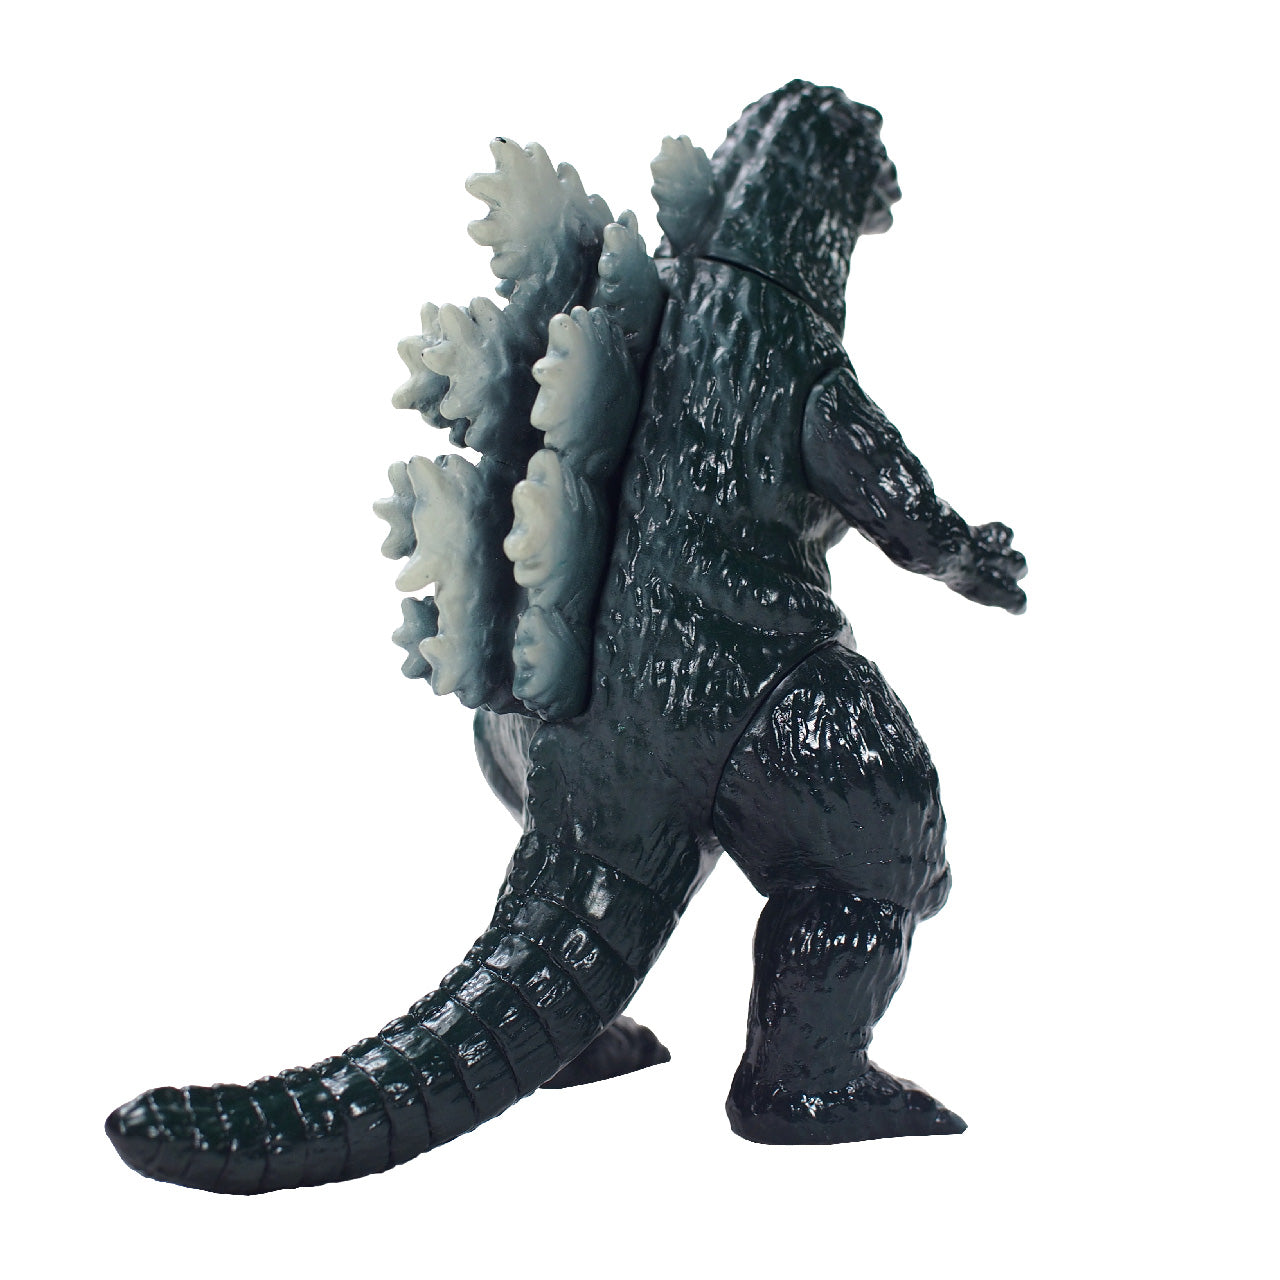 CCP Middle Size Series Vol.6 Godzilla (1995) Junior Image Complete Figure